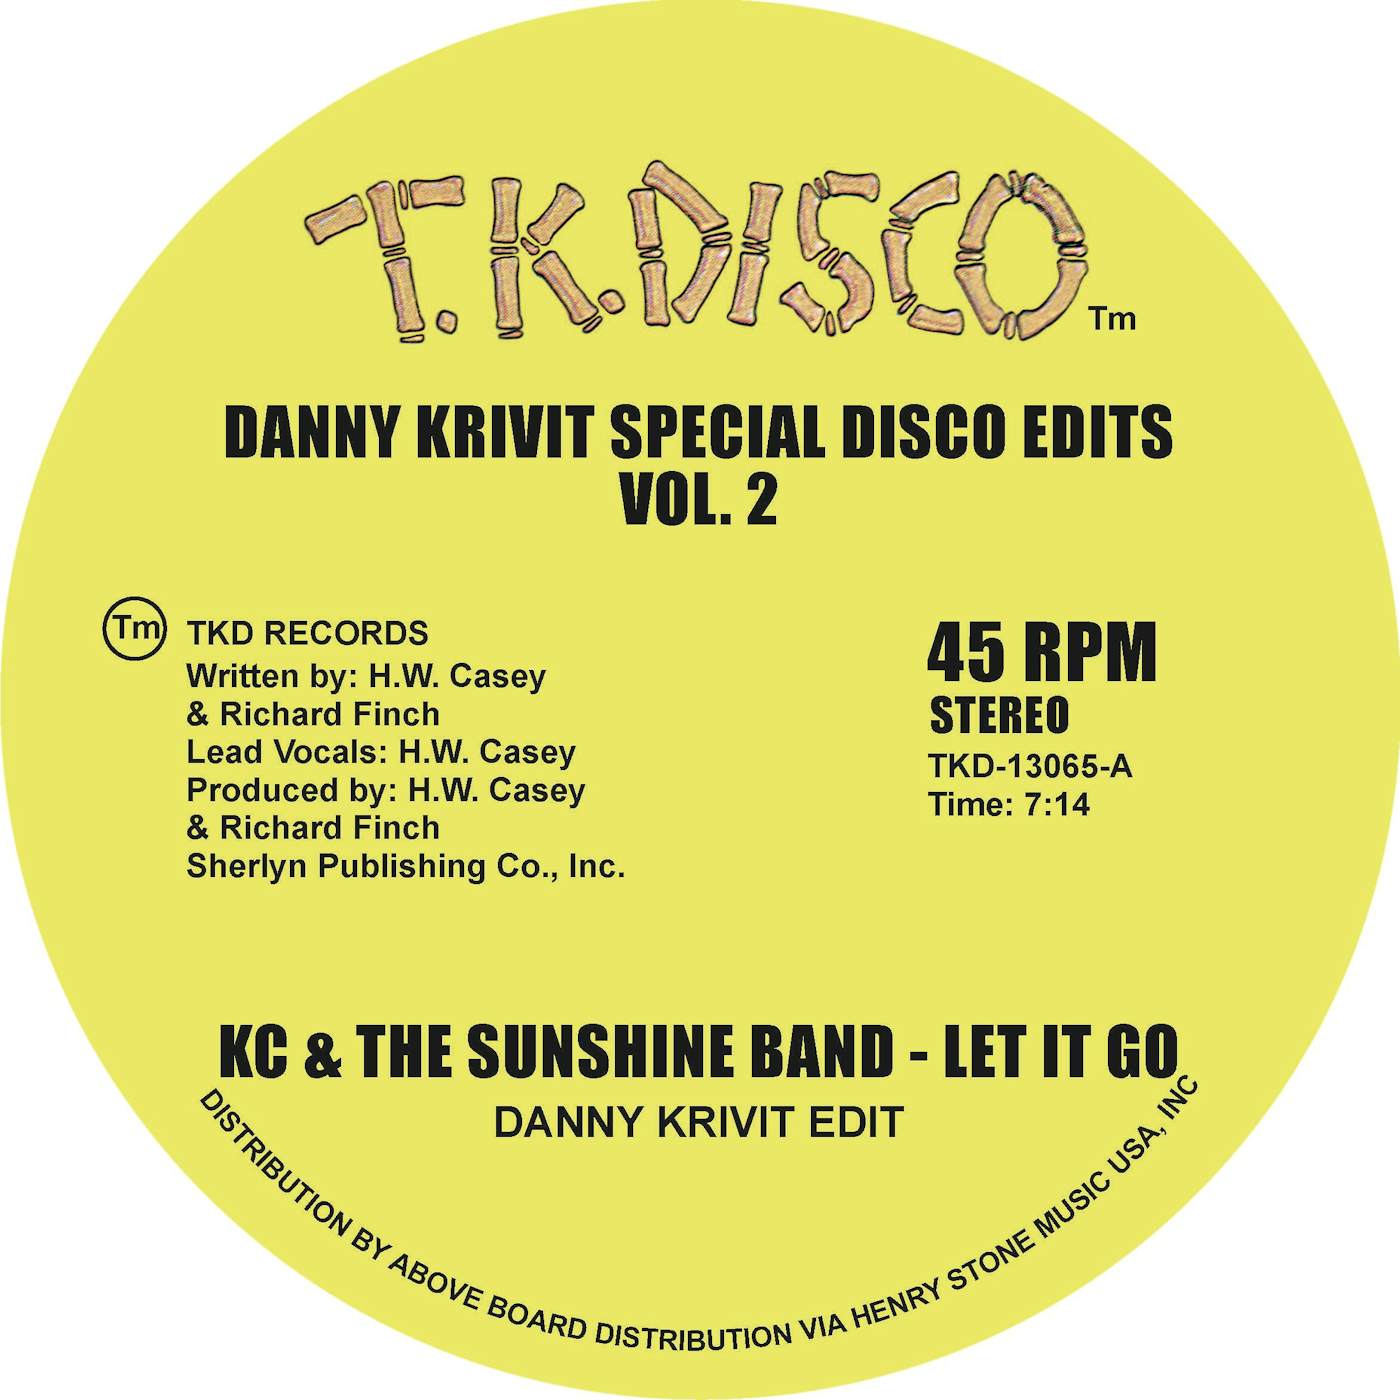 K.C. & SUNSHINE BAND DANNY KRIVIT SPECIAL DISCO EDITS VOL. 2 Vinyl Record